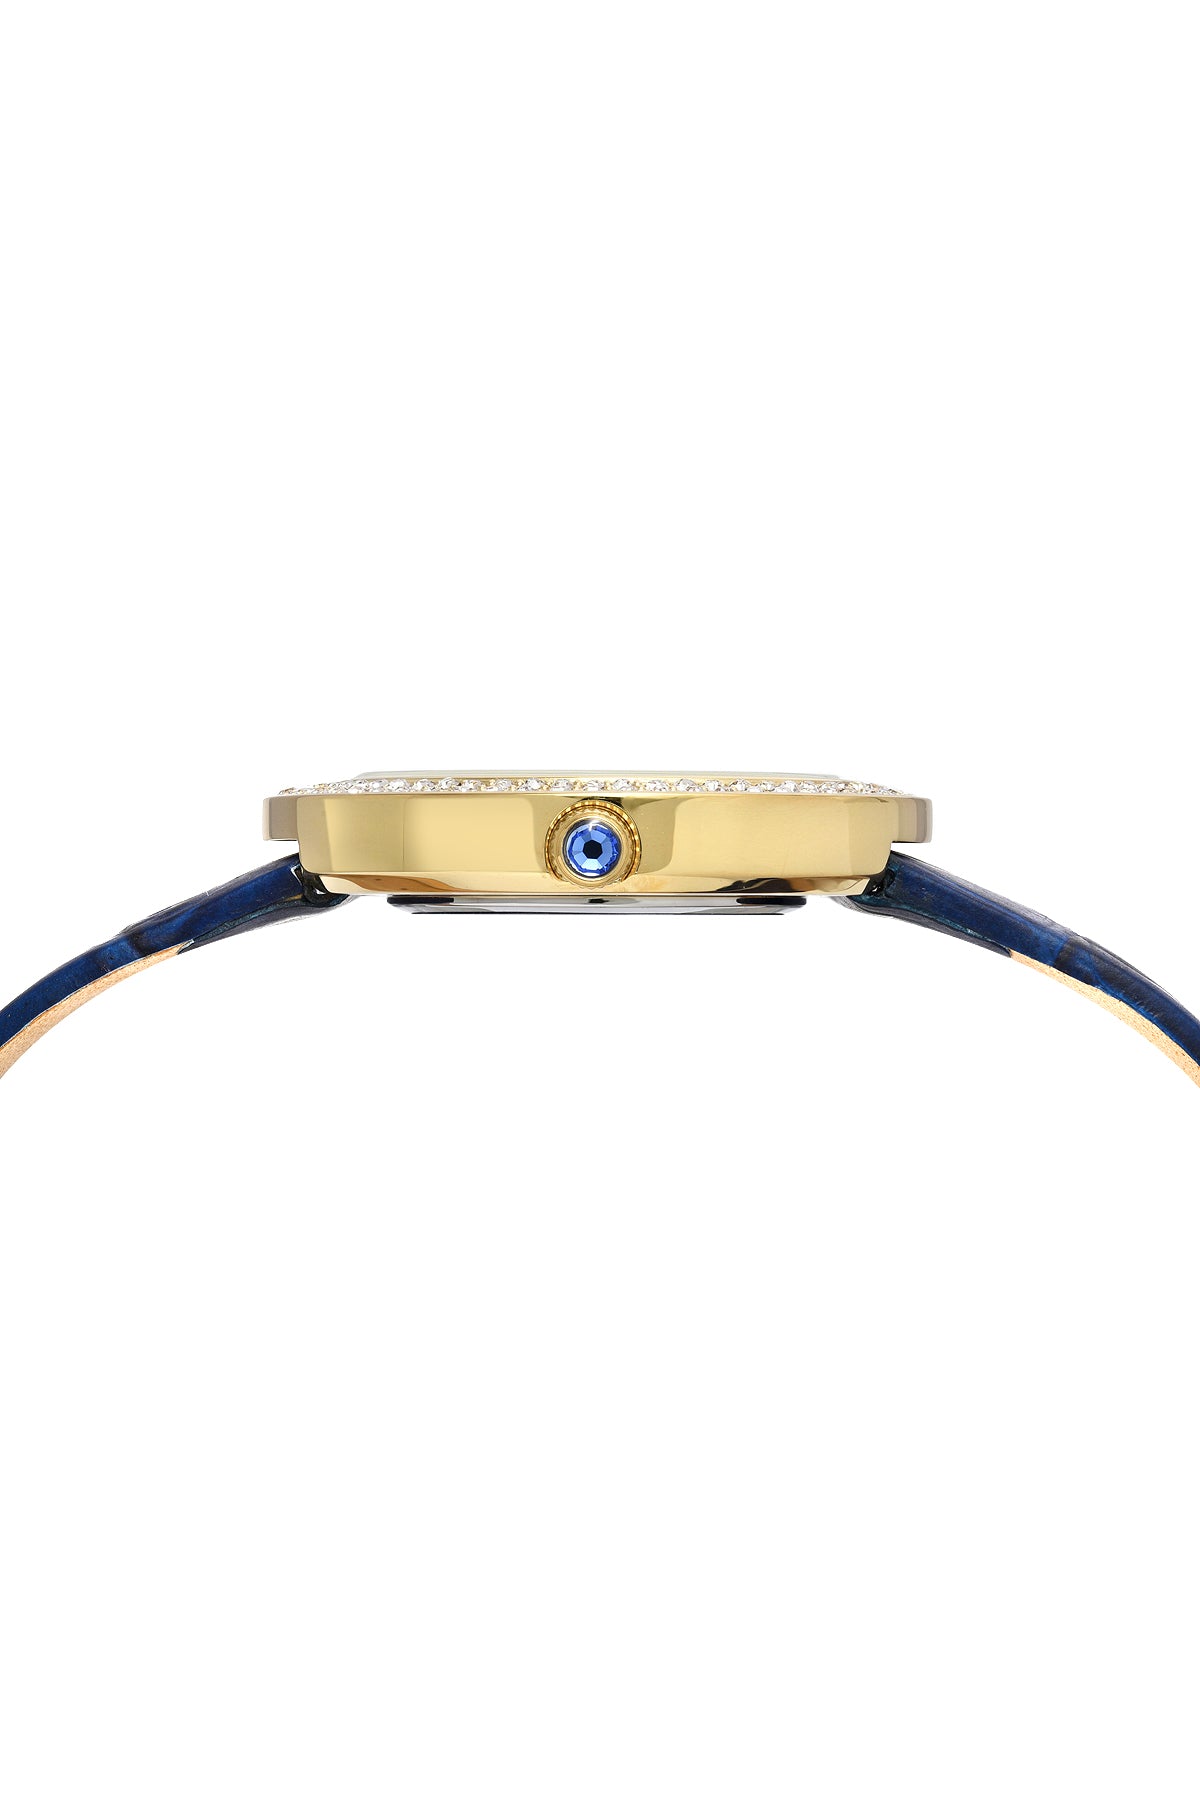 Porsamo Bleu Larissa luxury women's watch, genuine leather band, crystal inlaid bezel, white, gold, blue 892BLAL